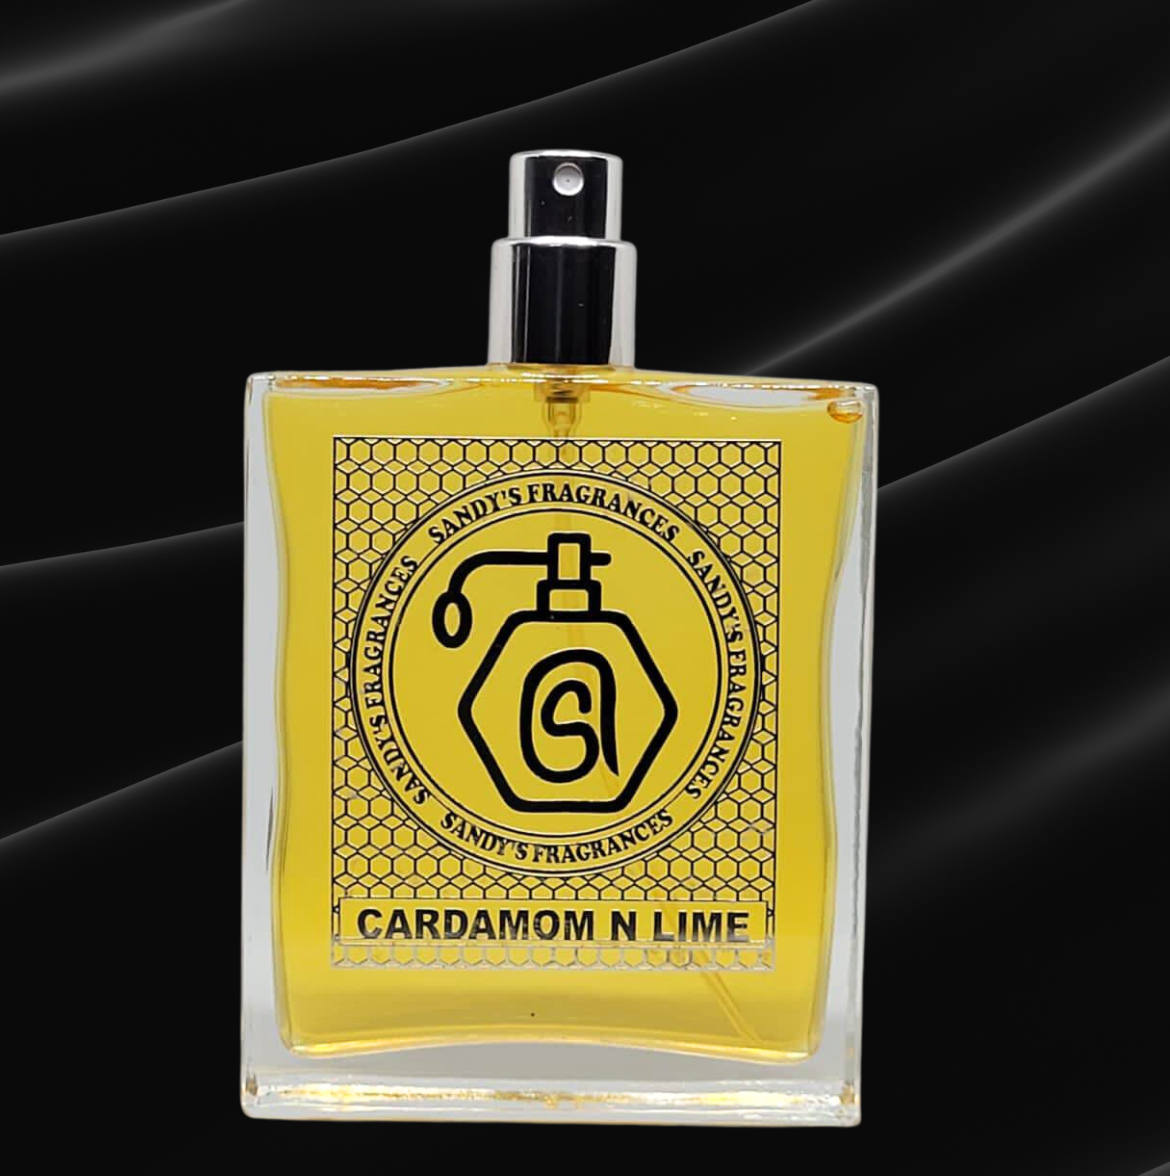 CARDAMOM N LIME by Sandy’s fragrance